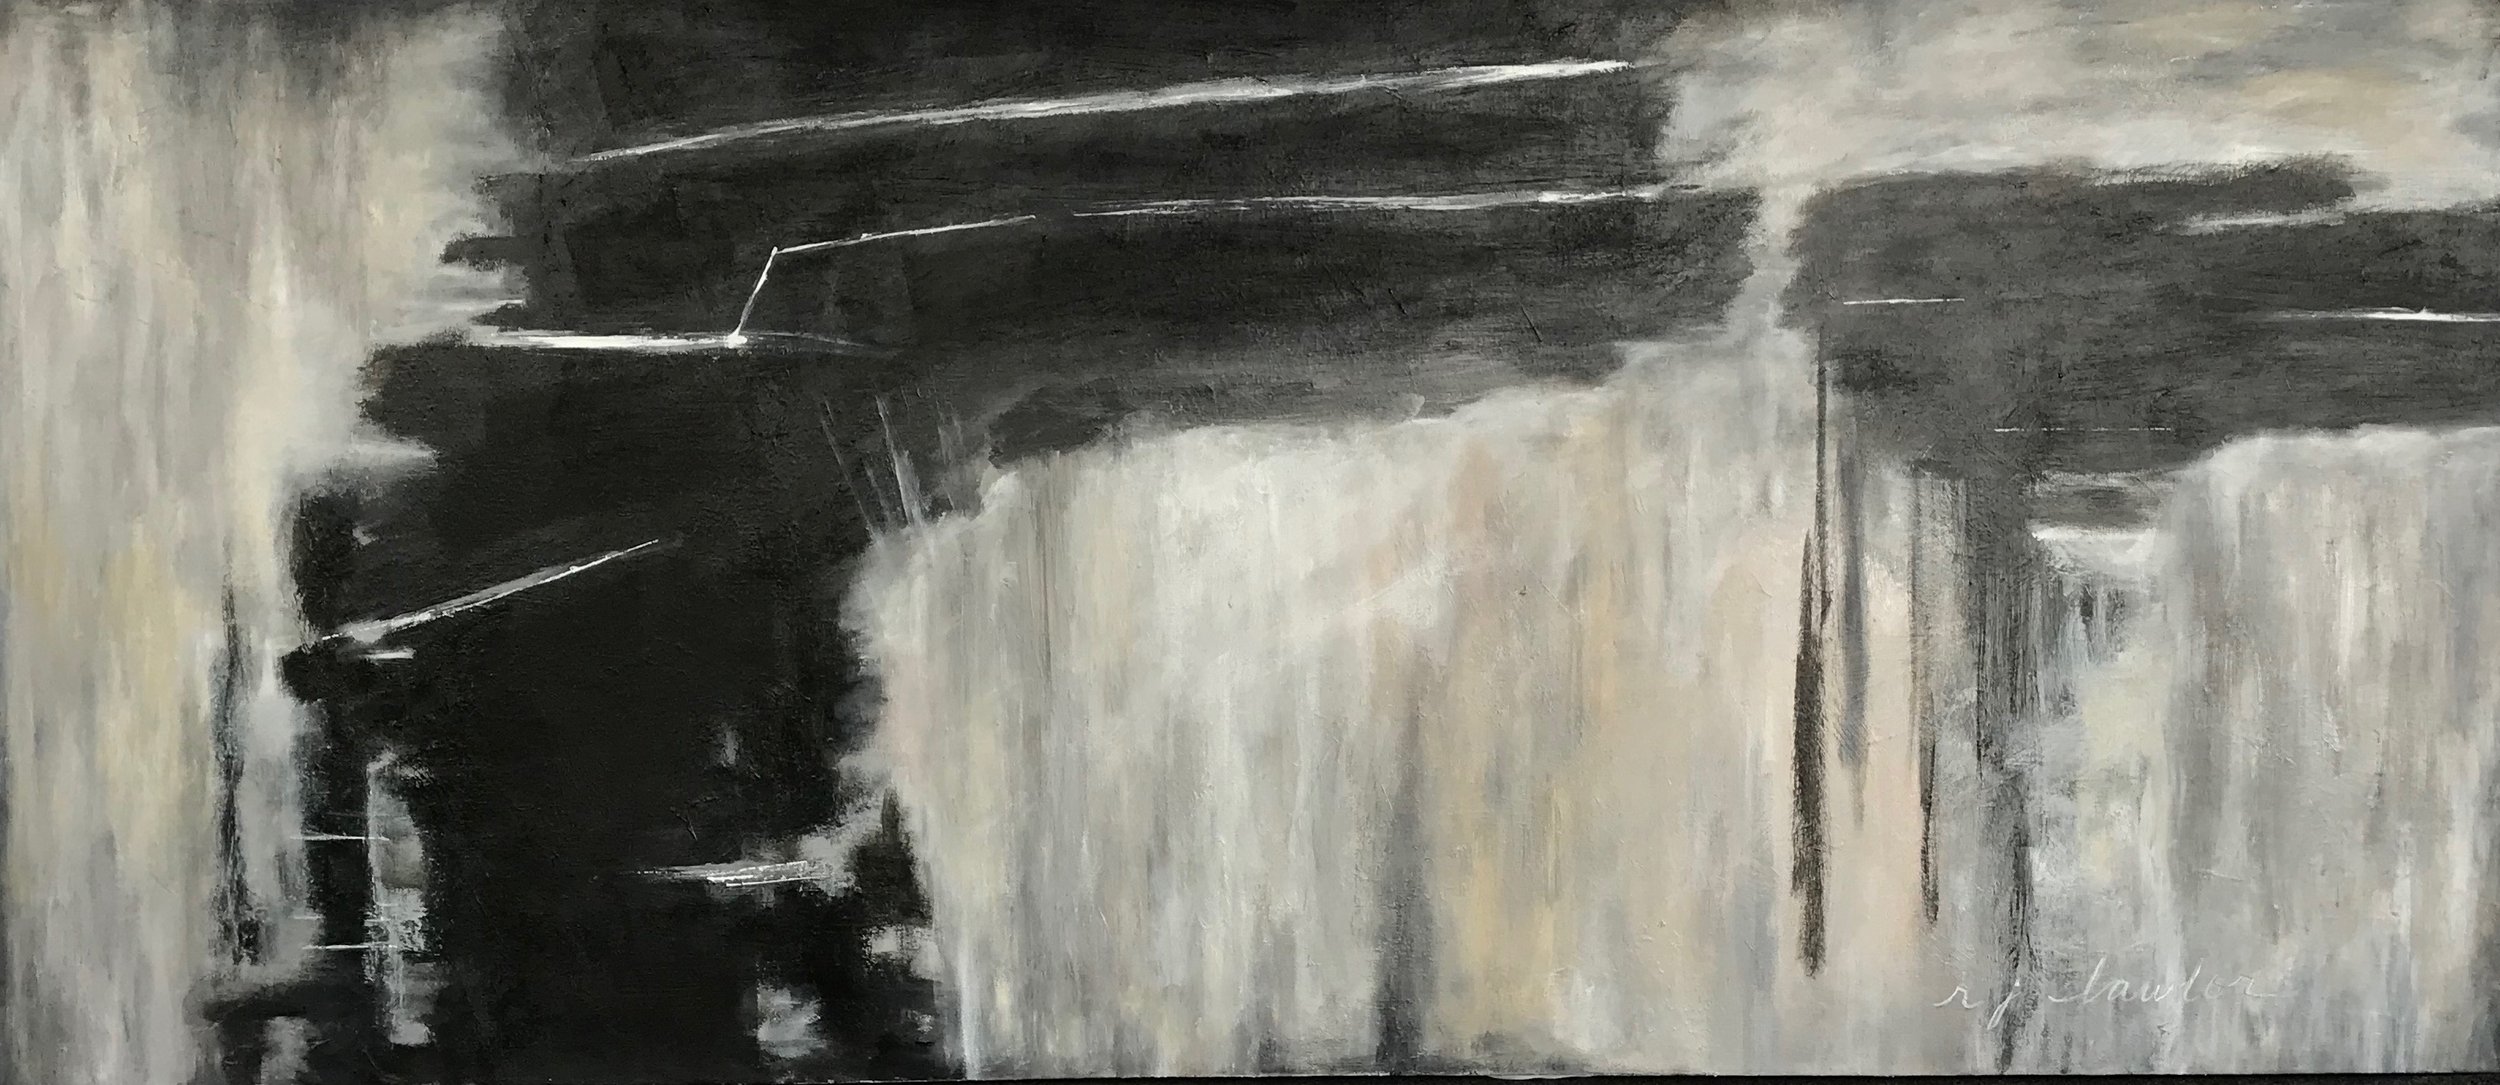    Wall Cloud No. 231  , 30” x 70”, acrylic on canvas 